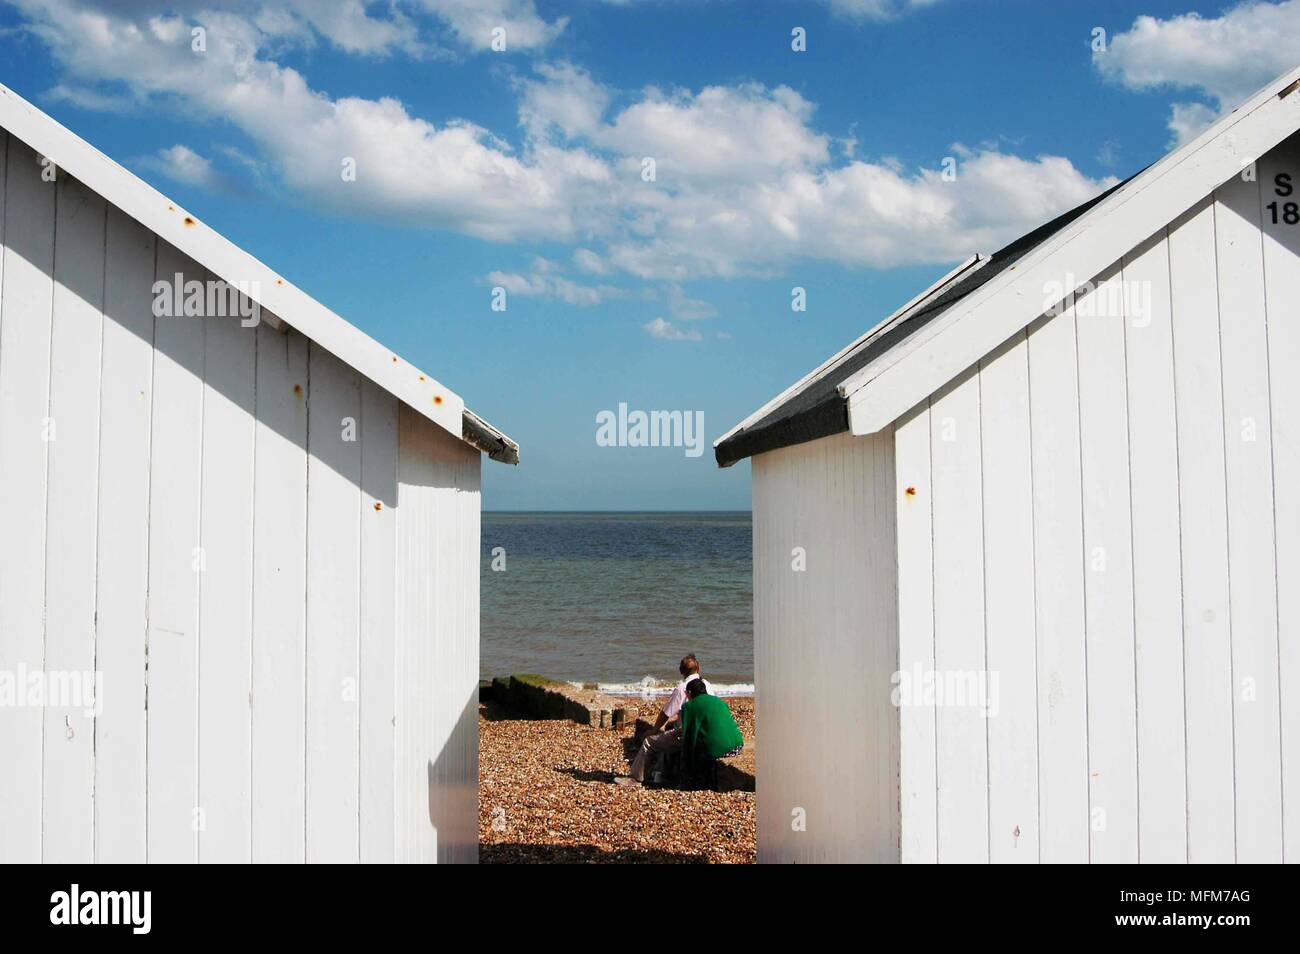 David Potter / Band /Hotshoe/Photoshot - Beach scenes - Beach huts at Felixstowe - UK. Bandphoto/COMPULSORY CREDIT: Hotshoe/Photoshot & Agency photo. Stock Photo